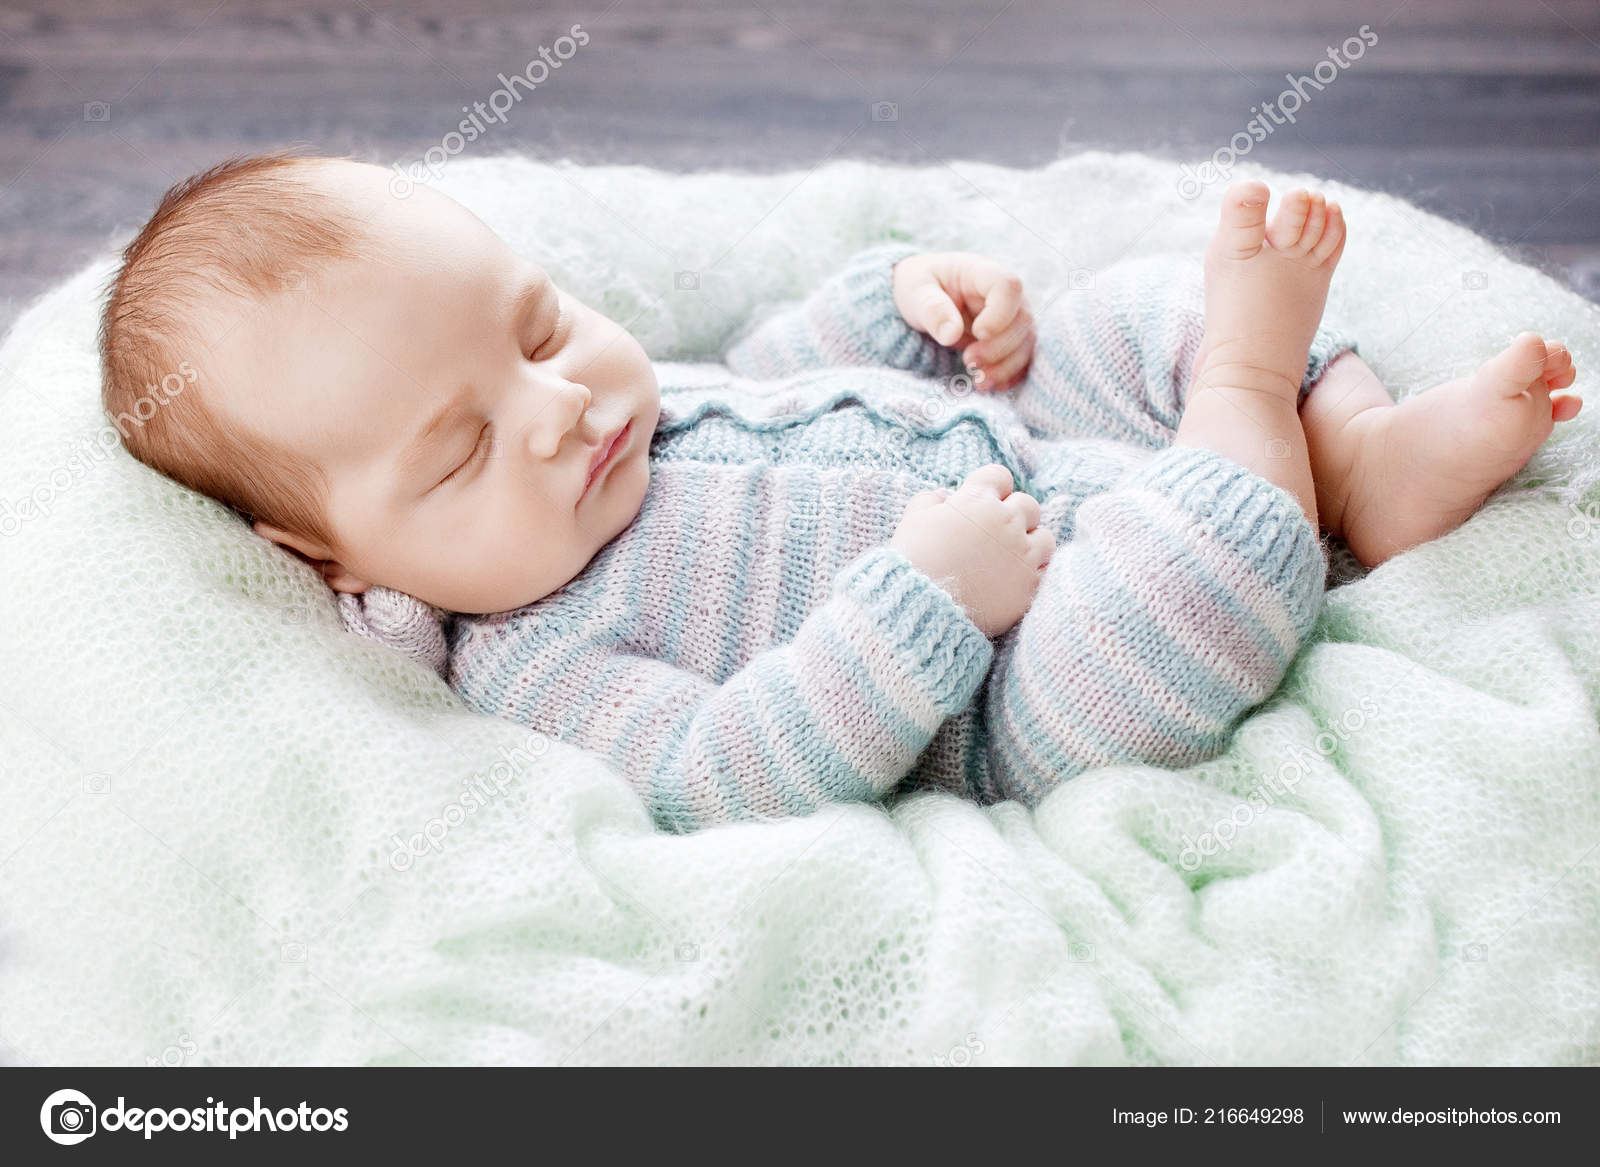 https://st4.depositphotos.com/9134572/21664/i/1600/depositphotos_216649298-stock-photo-portrait-sleeping-newborn-baby-boy.jpg